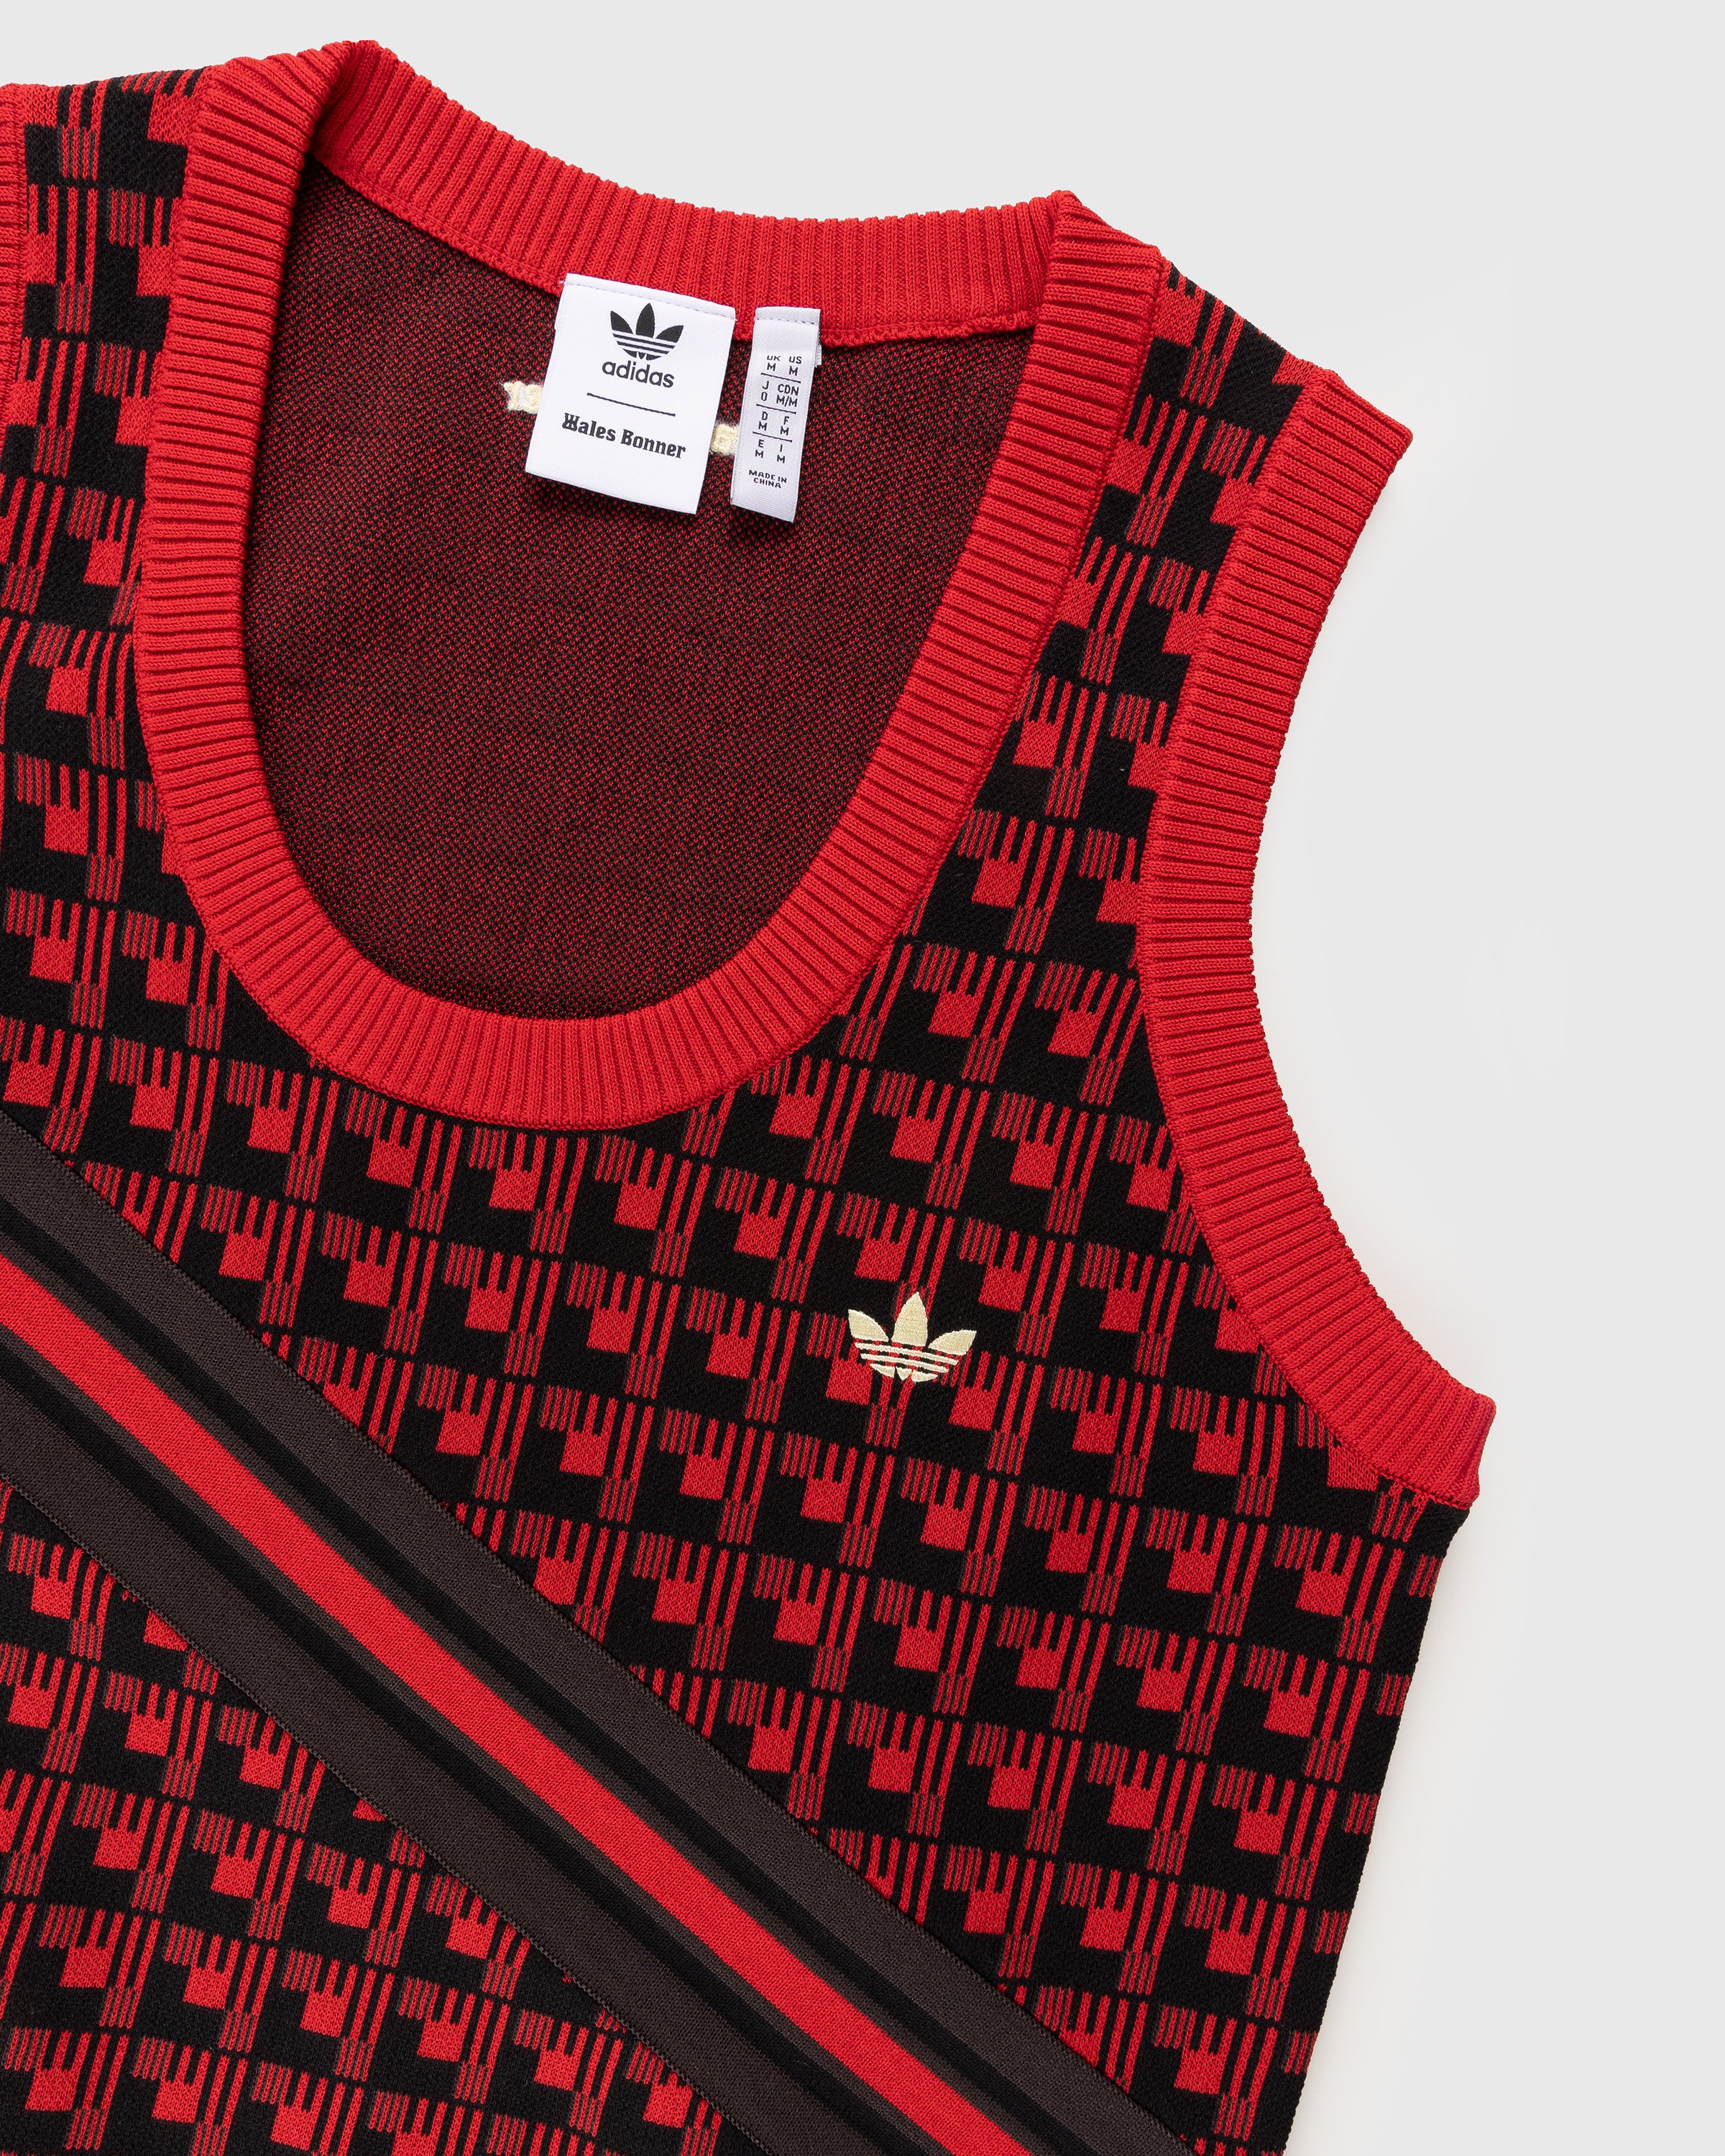 Adidas x Wales Bonner - WB Knit Vest Scarlet/Black - Clothing - Red - Image 3